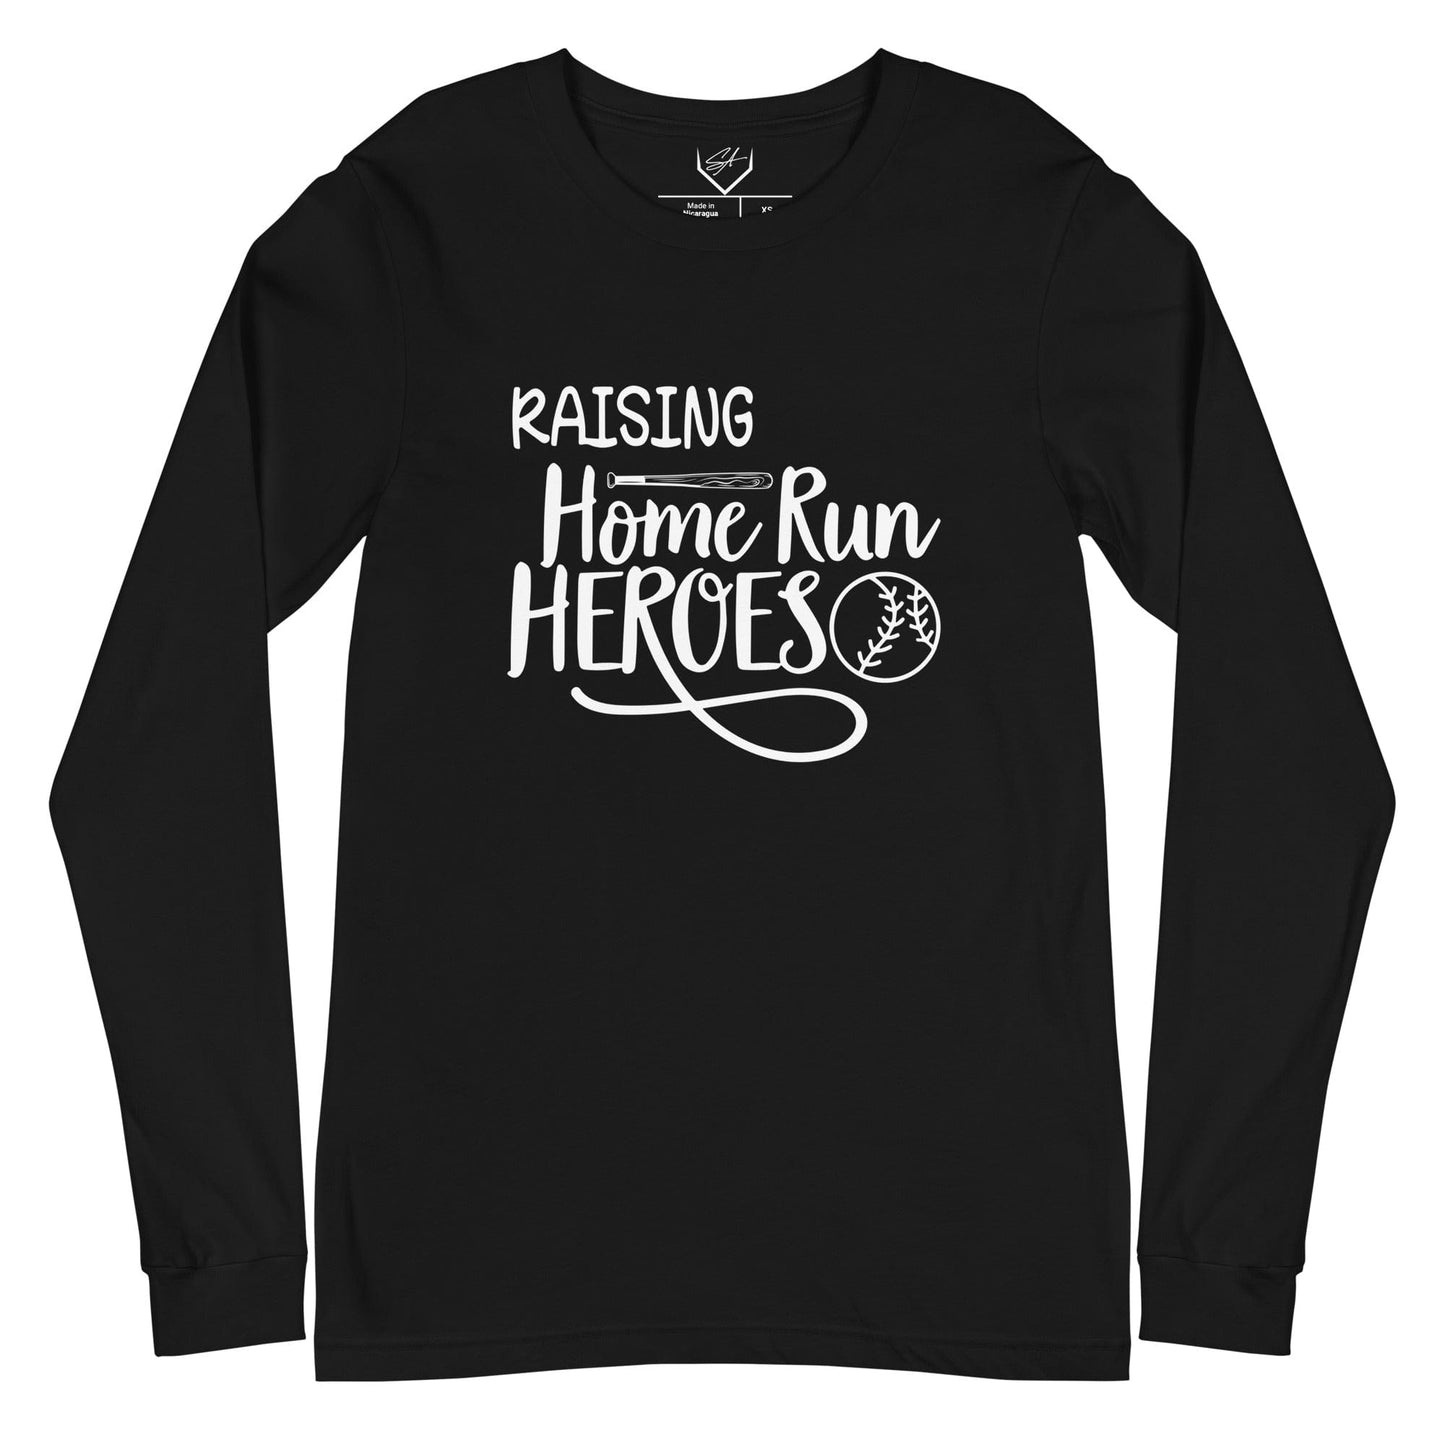 Raising Home Run Heroes - Adult Long Sleeve